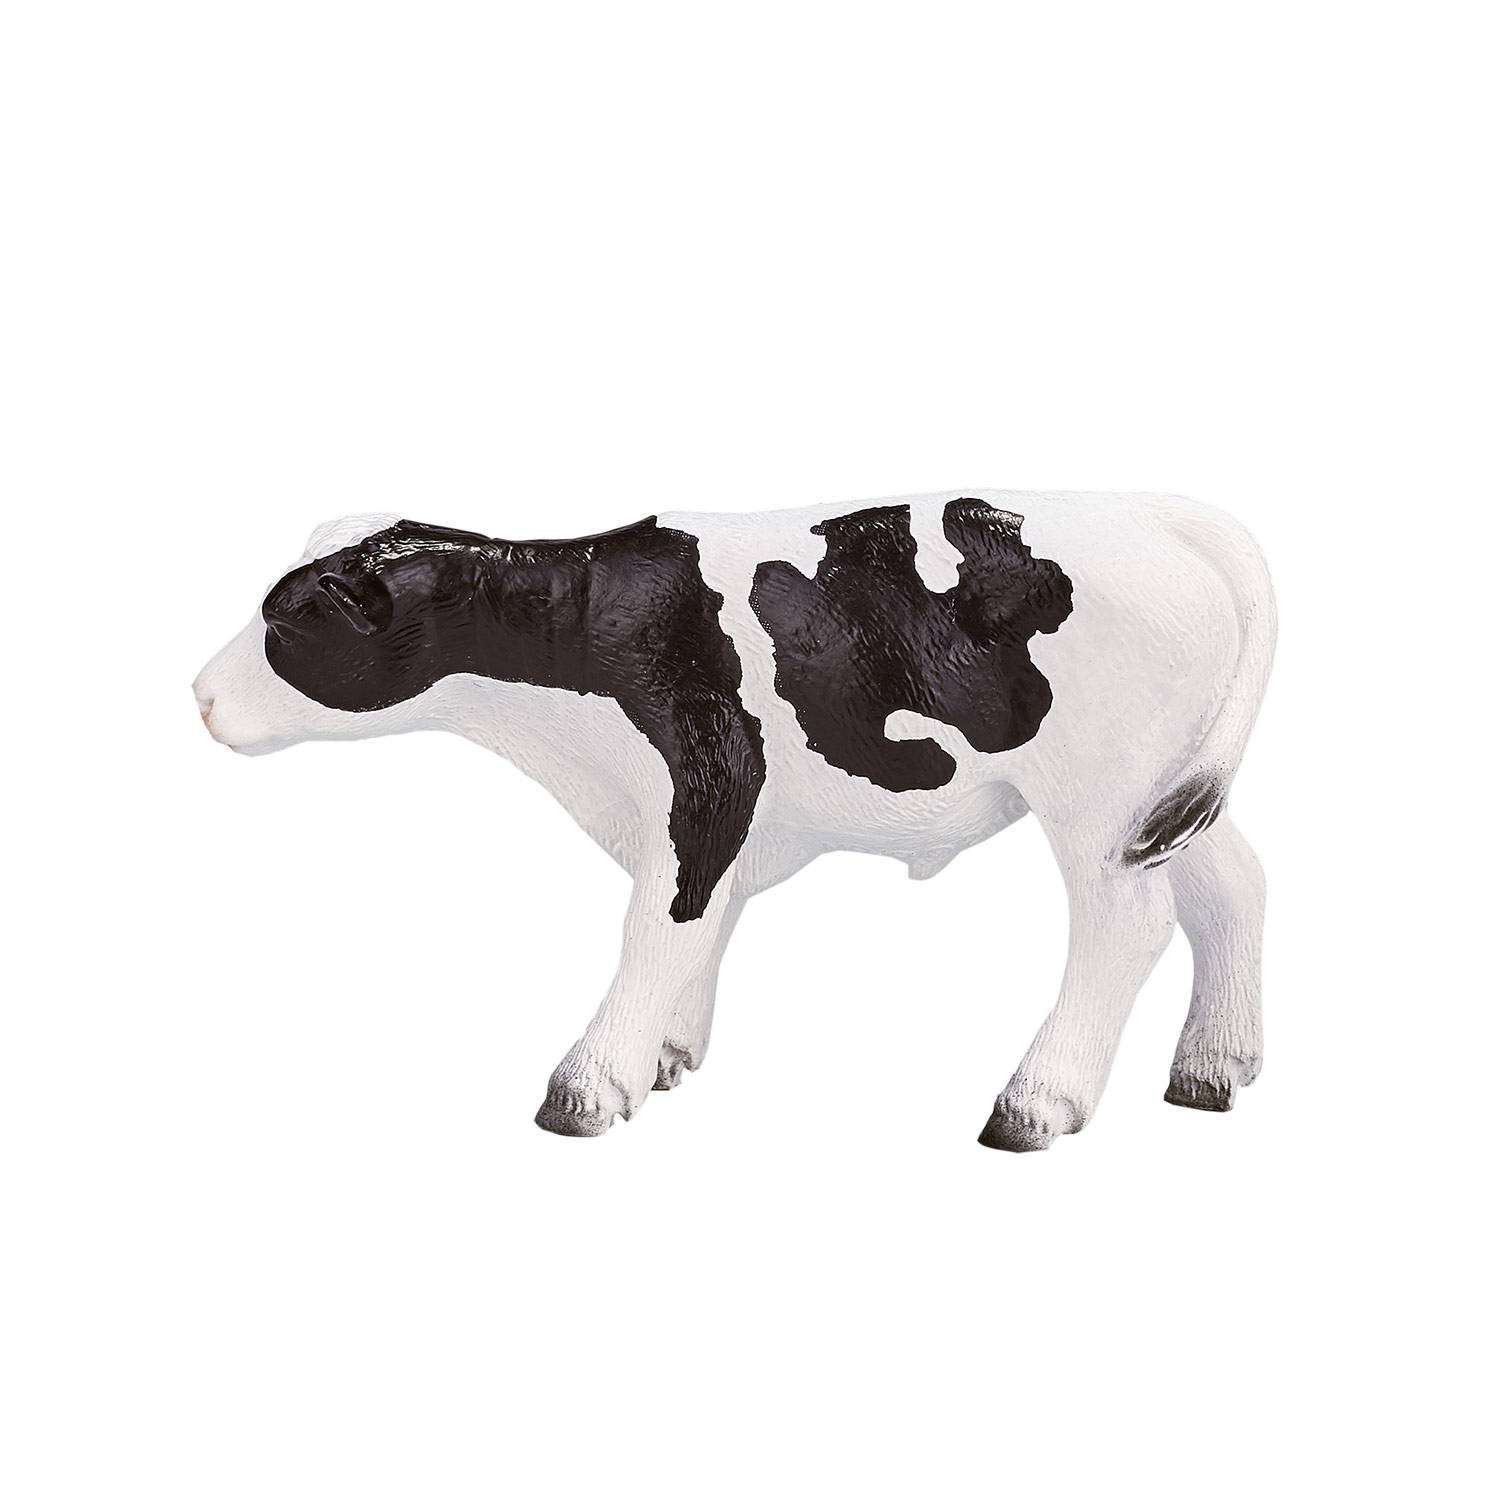 Mojo Farmland Holstein Kalf Staand - 387061